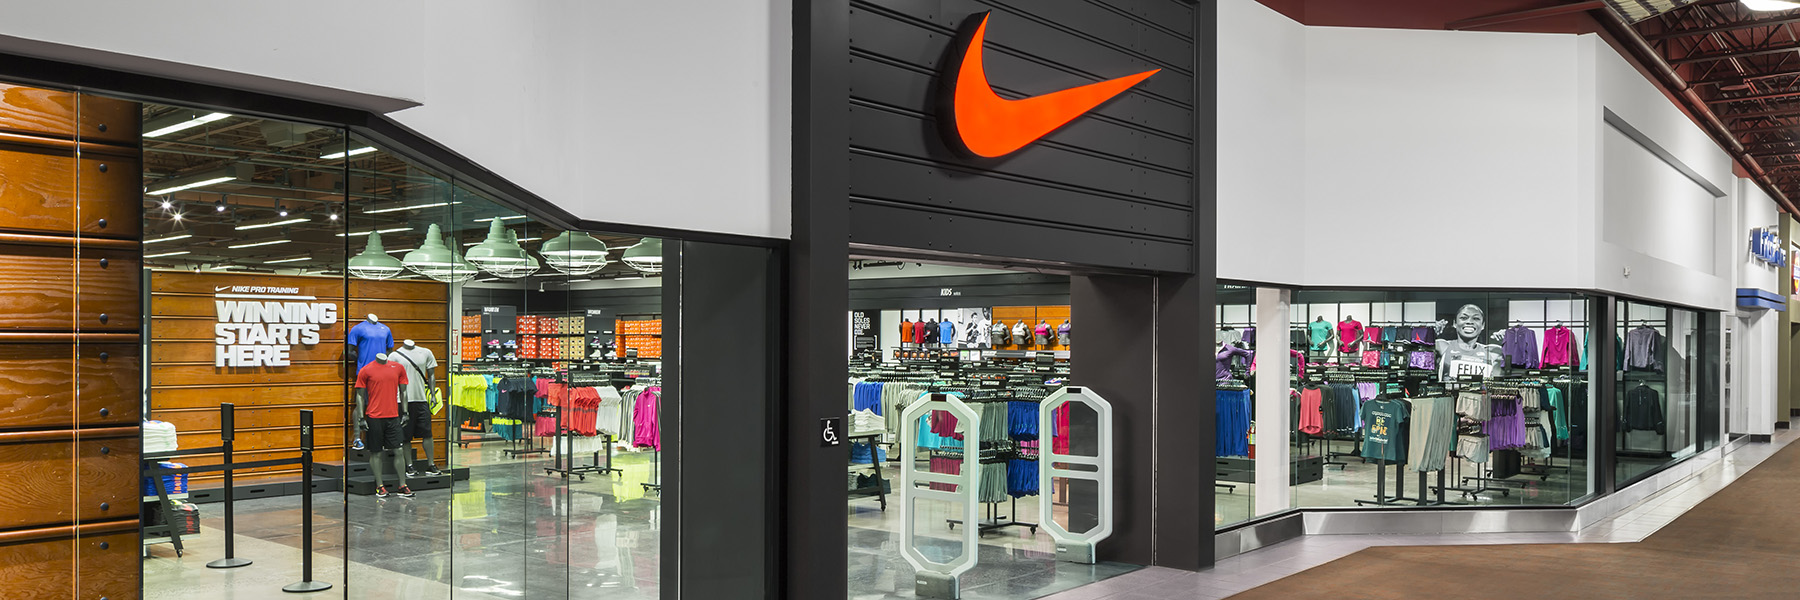 Inferir tempo tanque Nike South Premium Outlets Dubai, SAVE 42% - cfdt-services-funeraires.fr